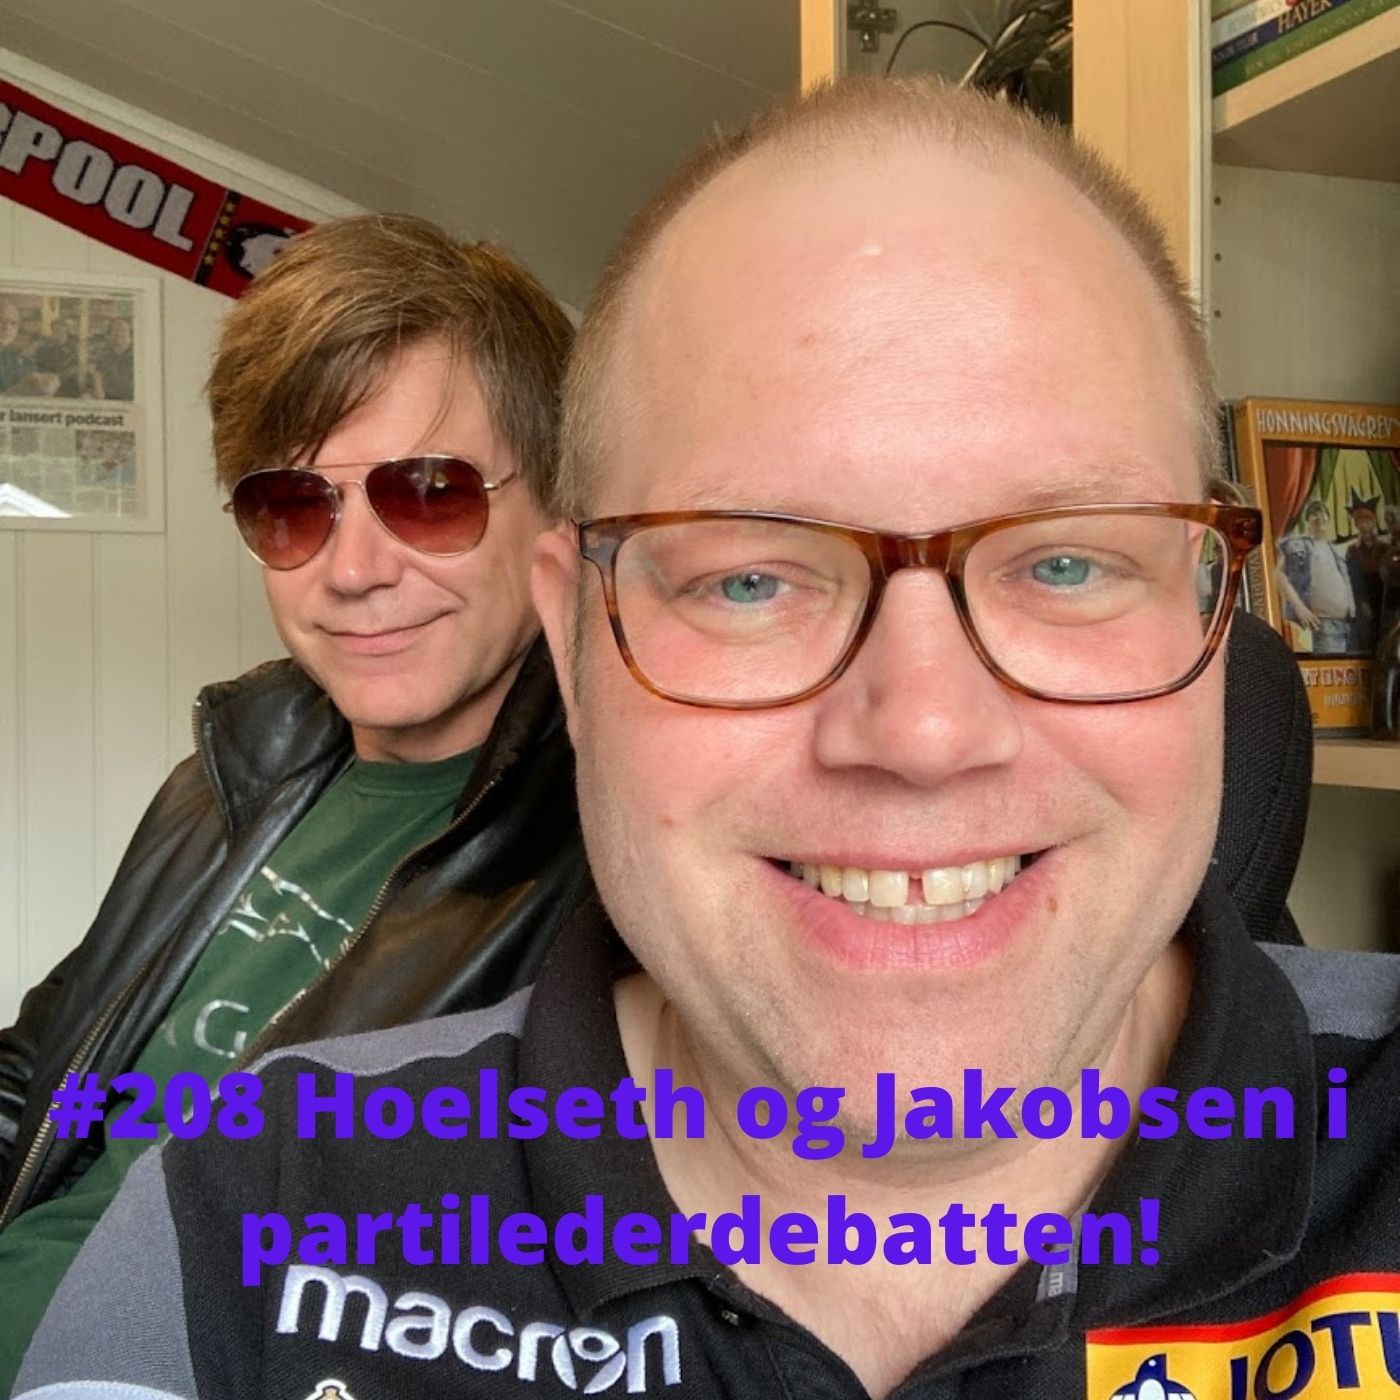 208-hoelseth-og-jakobsen-i-partilederdebatten-liberaleren-podcast